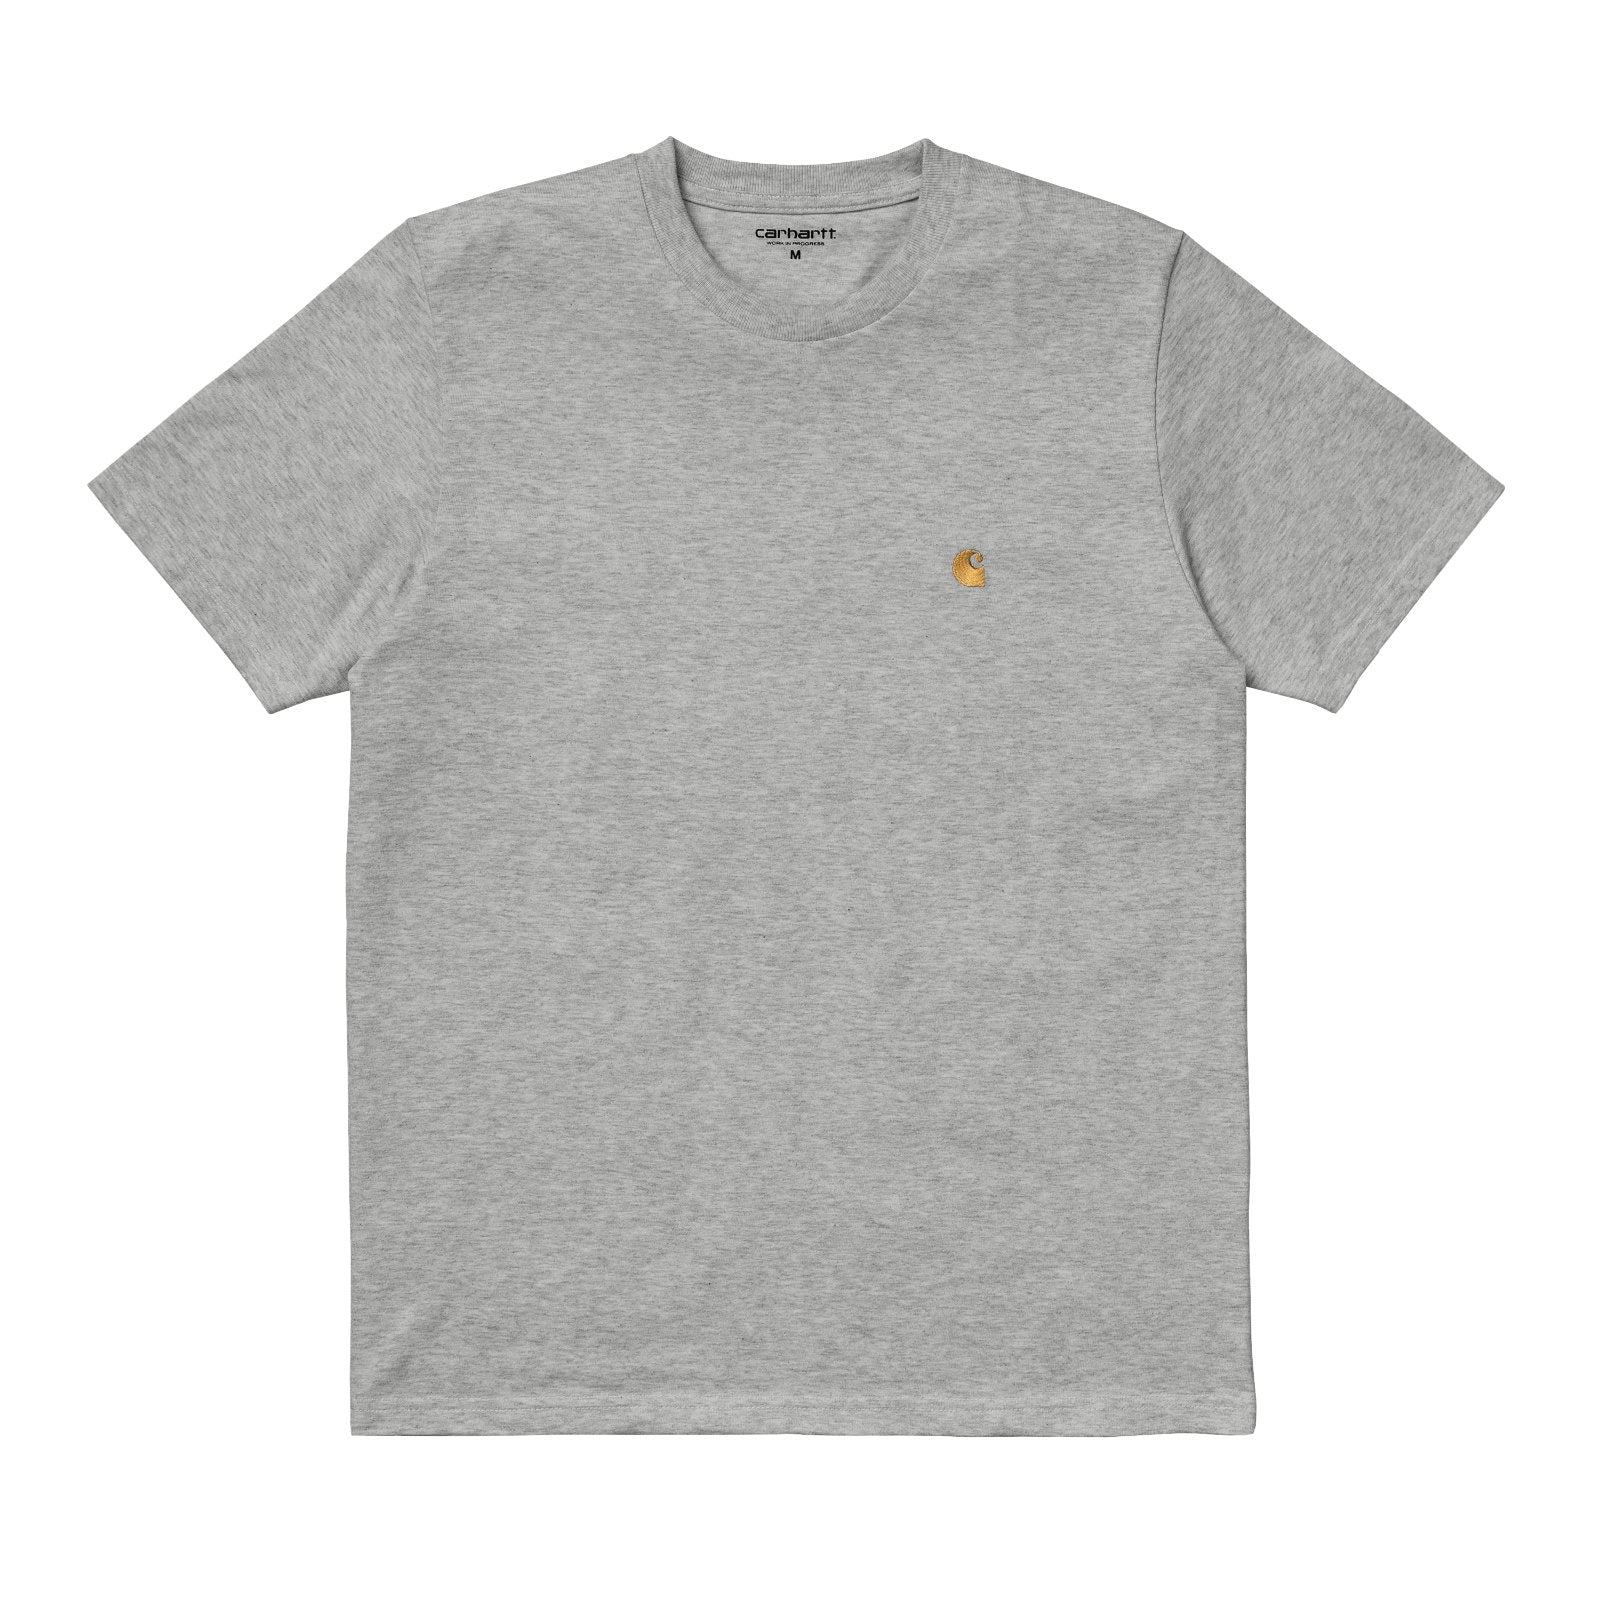 Carhartt WIP Chase T-Shirt Grey Heather/Gold. Foto de frente.